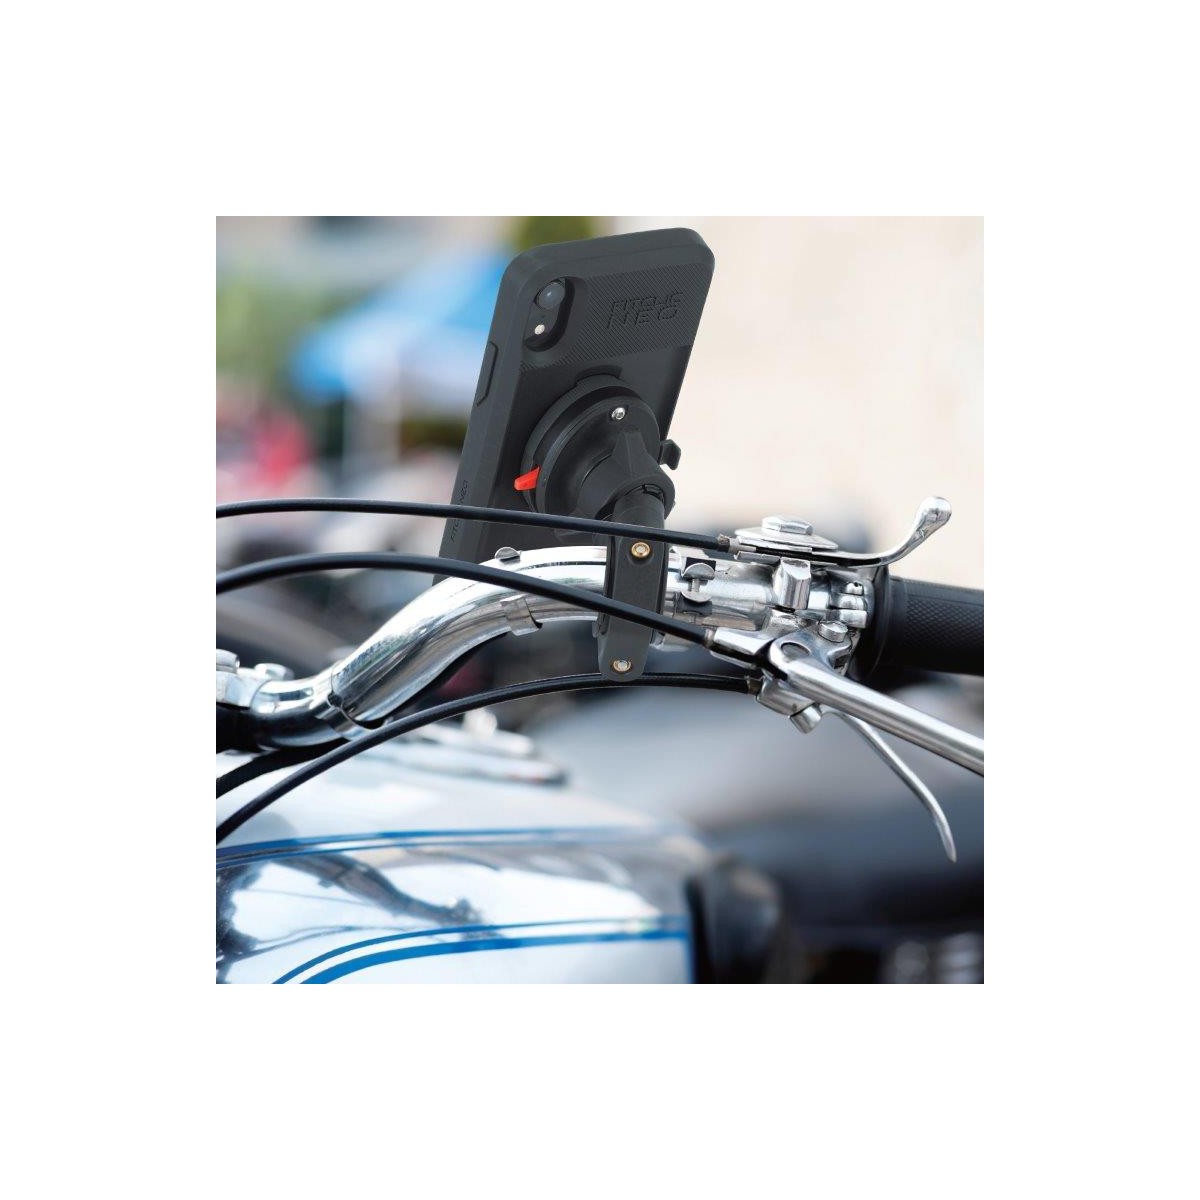 FitClic Neo Motorrad Kit für iPhone 11 Pro Max